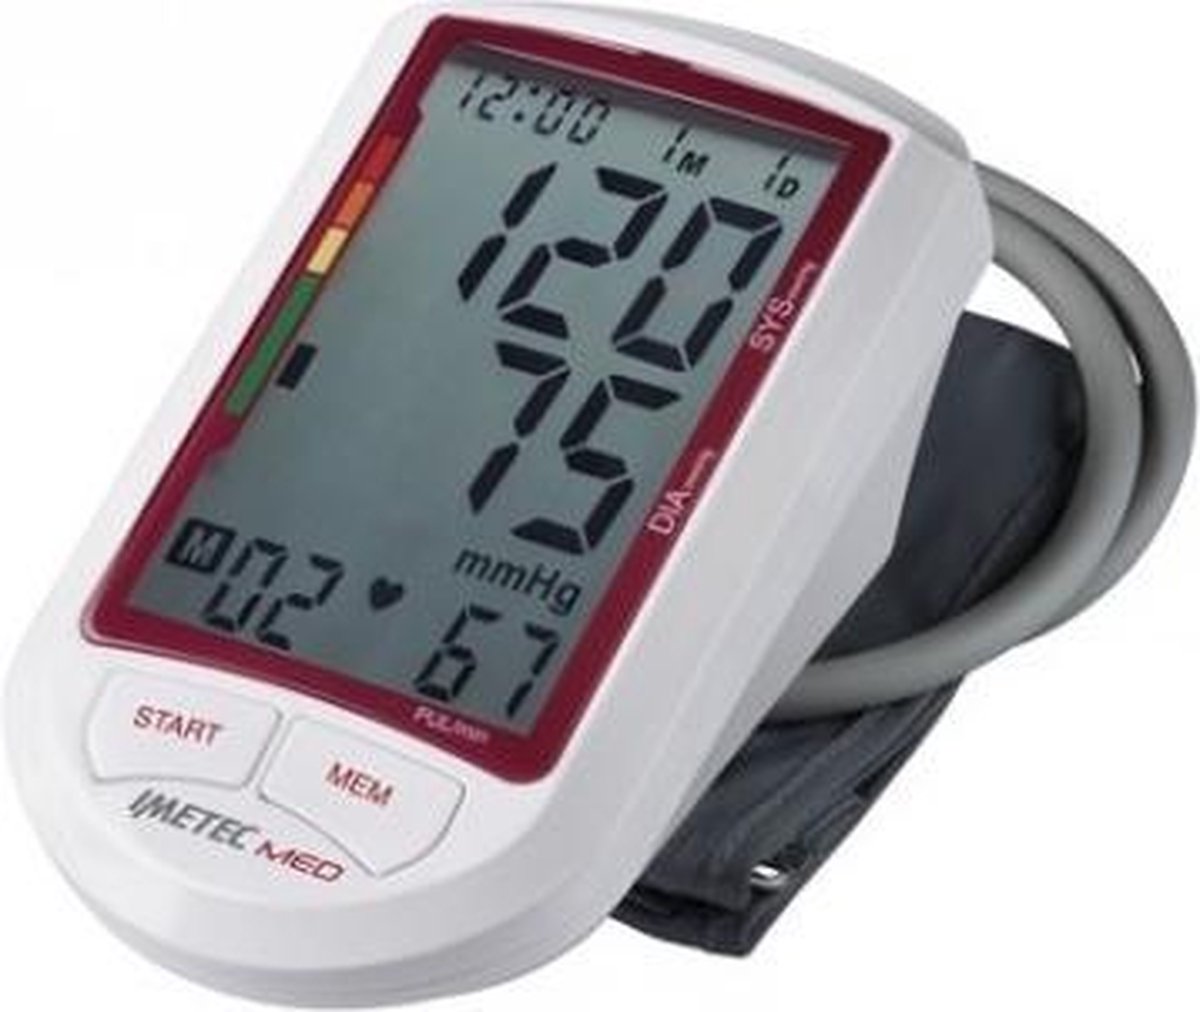 Imetec BP2 200 Bovenarm Automatic blood pressure unit 3gebruiker(s)